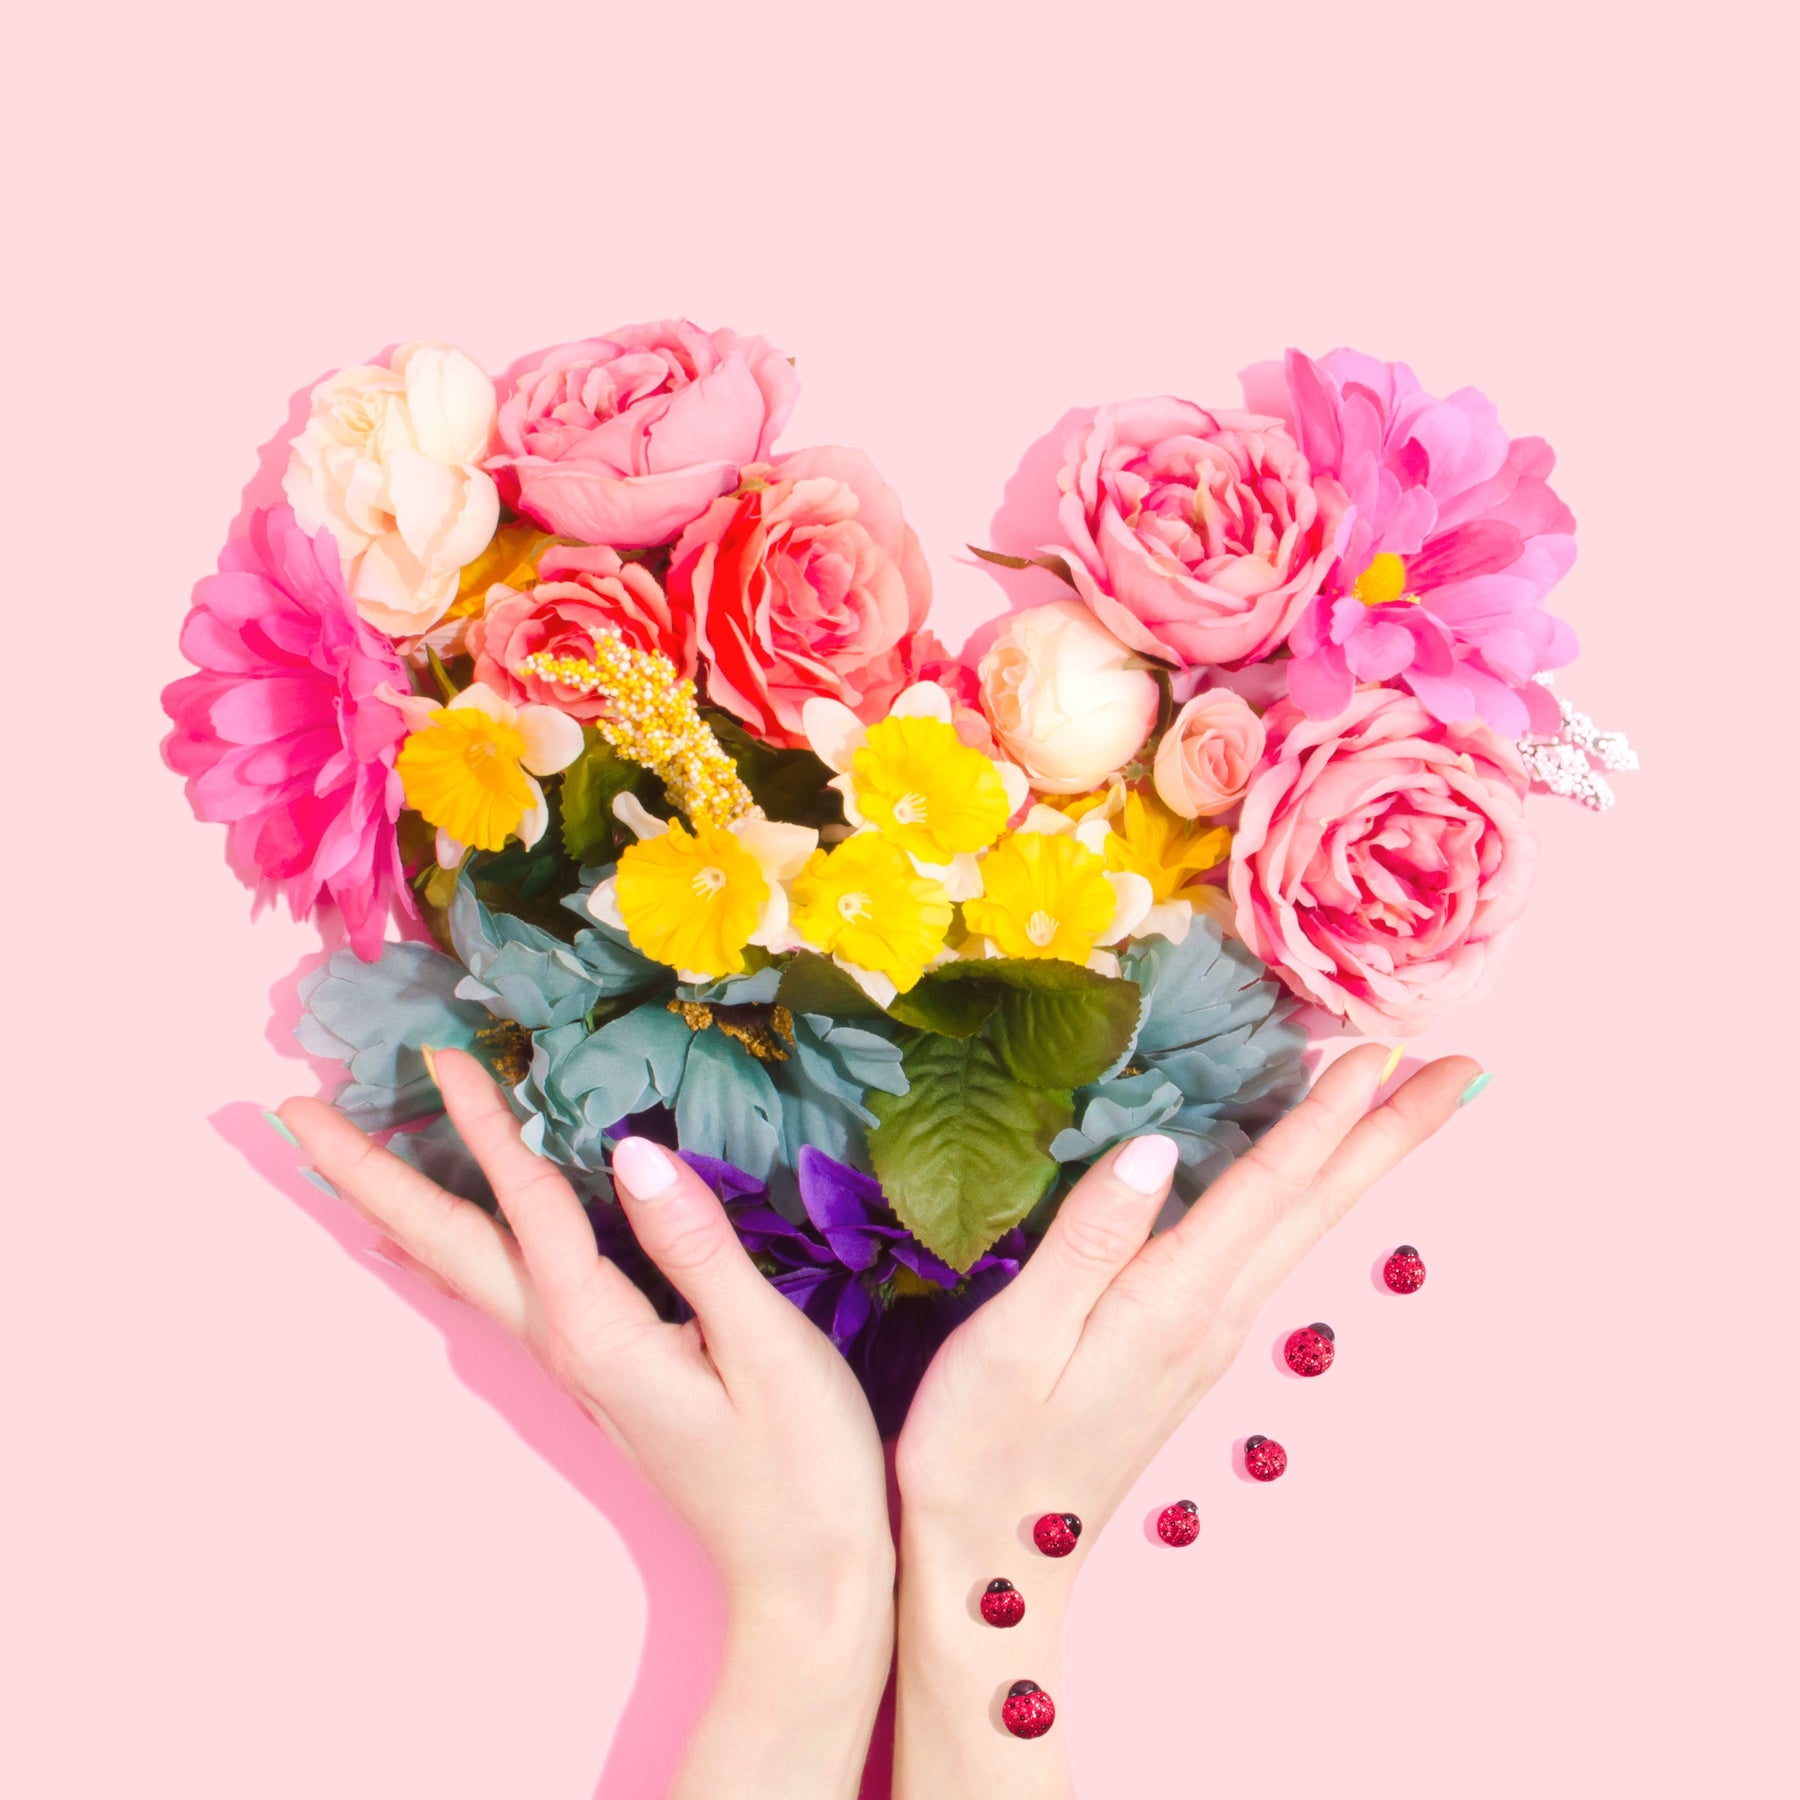 4 Amazing Last-Minute Valentine's Day Gift Ideas